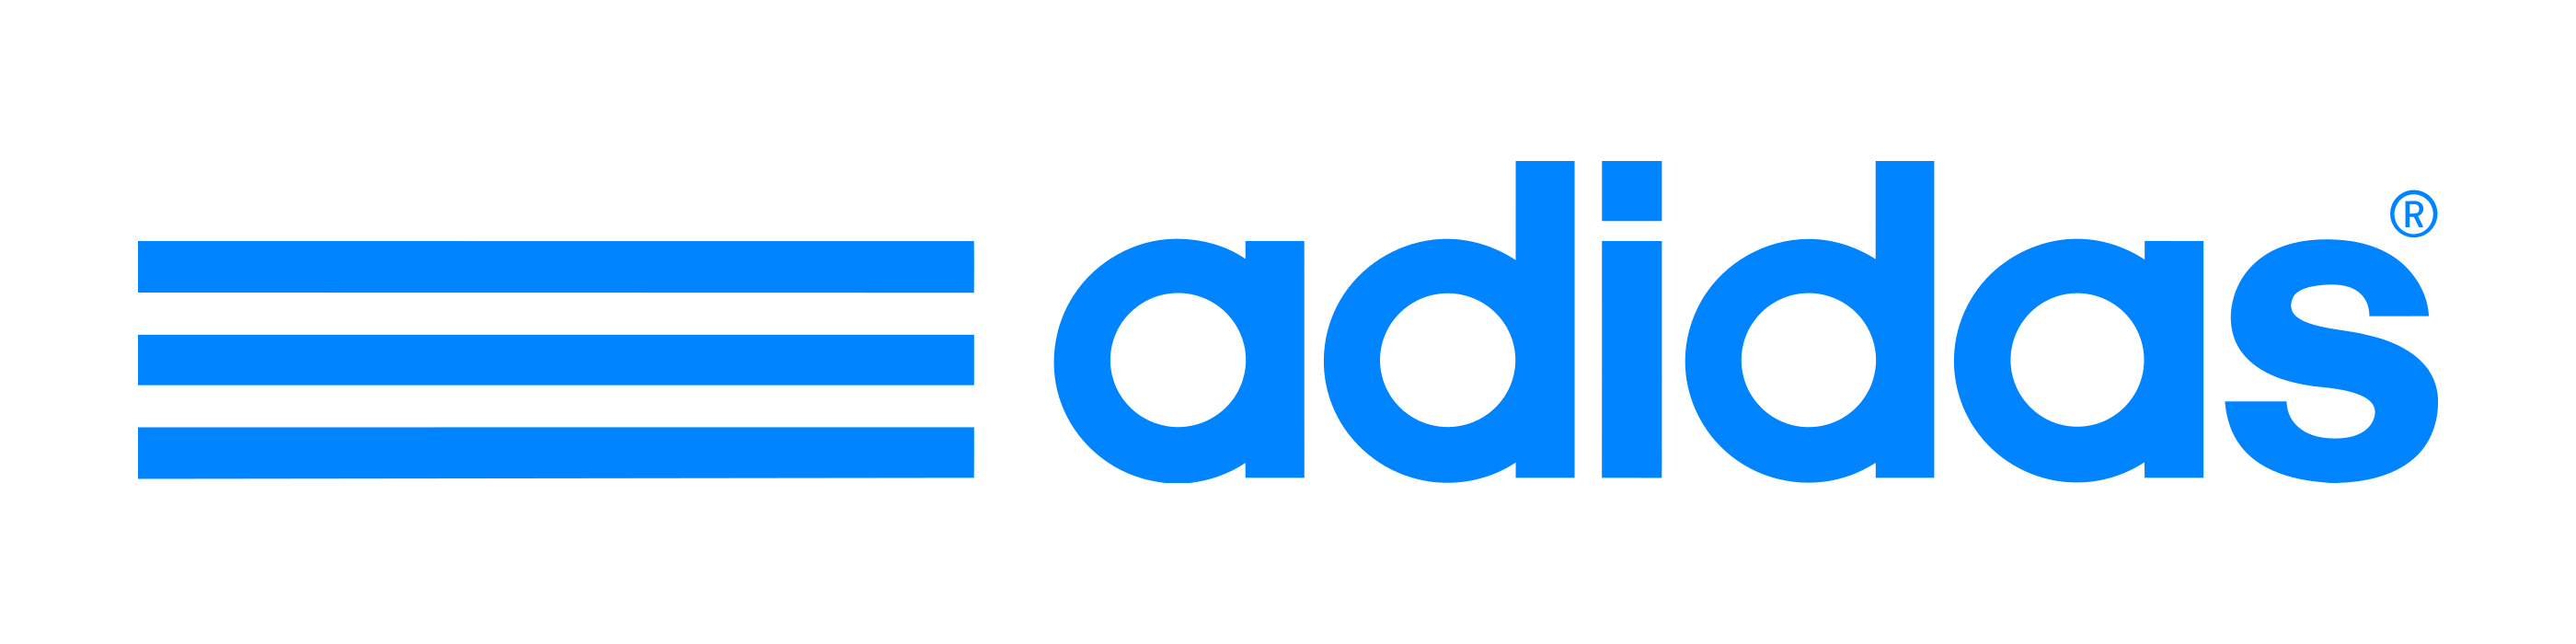 who designed the adidas logo